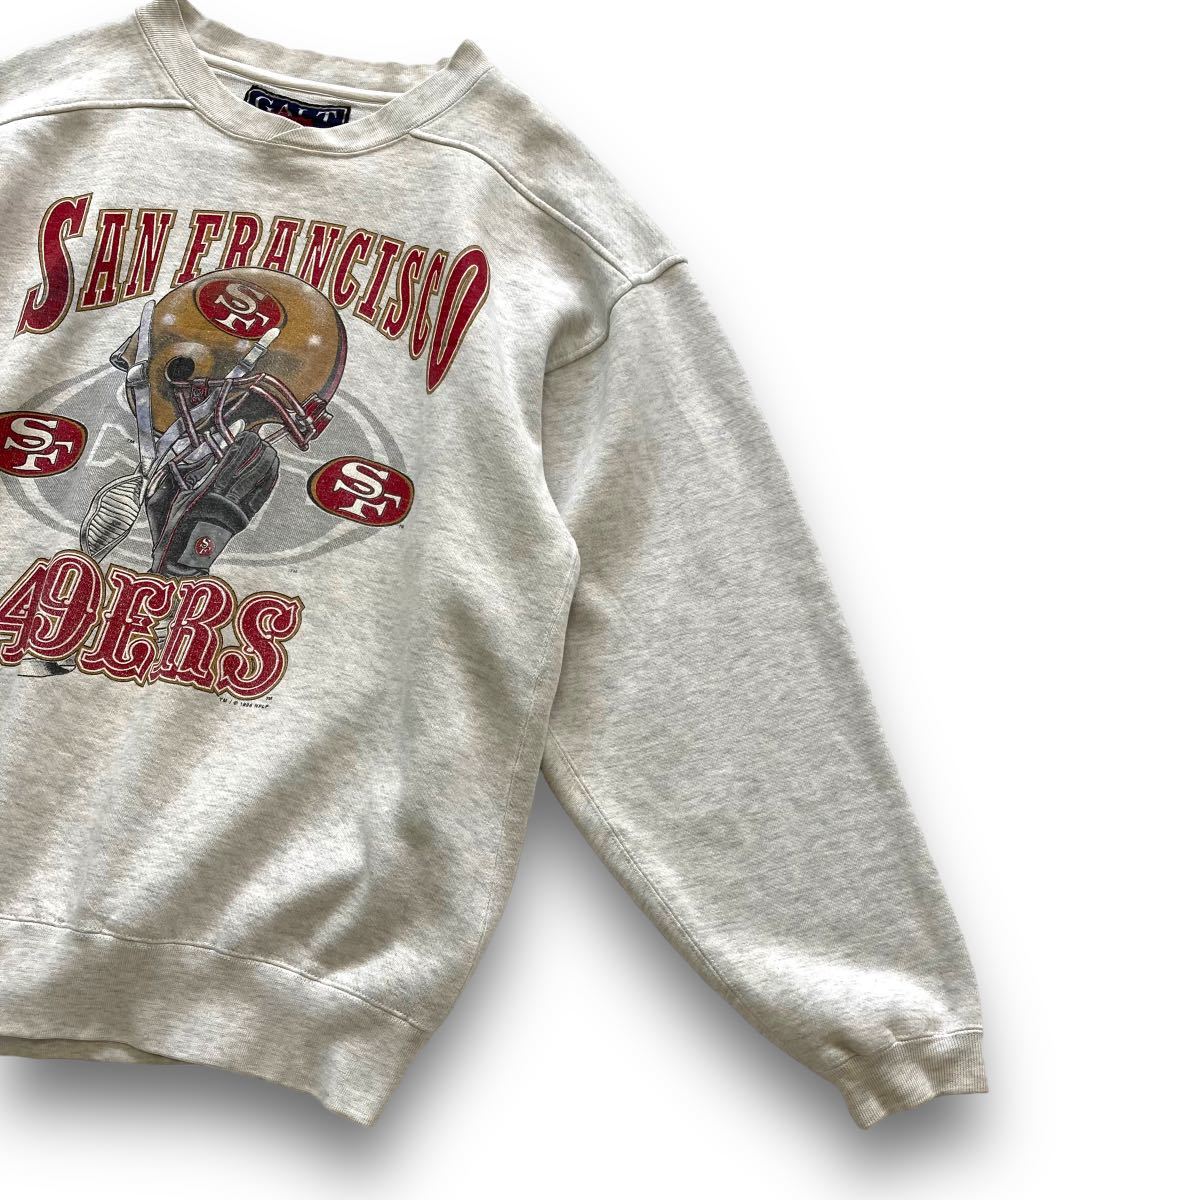 【SAN FRANCISCO 49ERS】90s NFL スウェットトレーナー GALT SAND 90年代 ヴィンテージ古着 サンフランシスコ・フォーティナイナーズ (L)_画像3